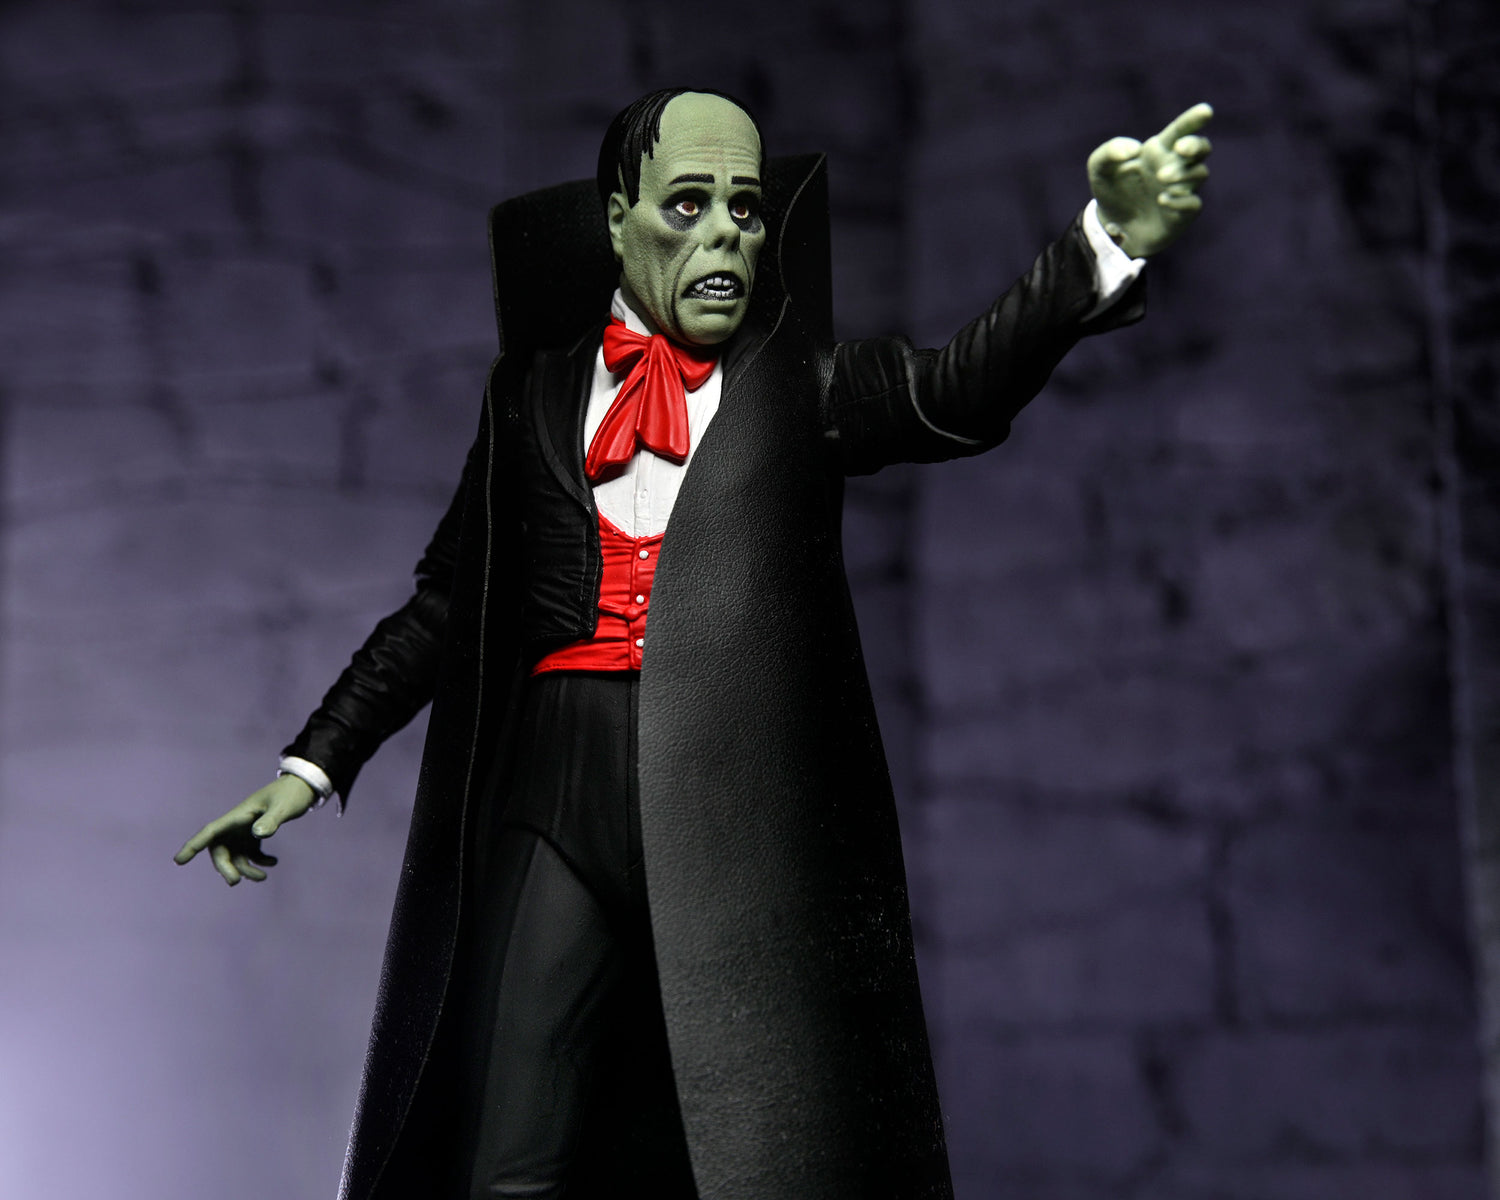 Phantom of the Opera - 7” Scale Action Figure - Glow-in-the-Dark Phantom